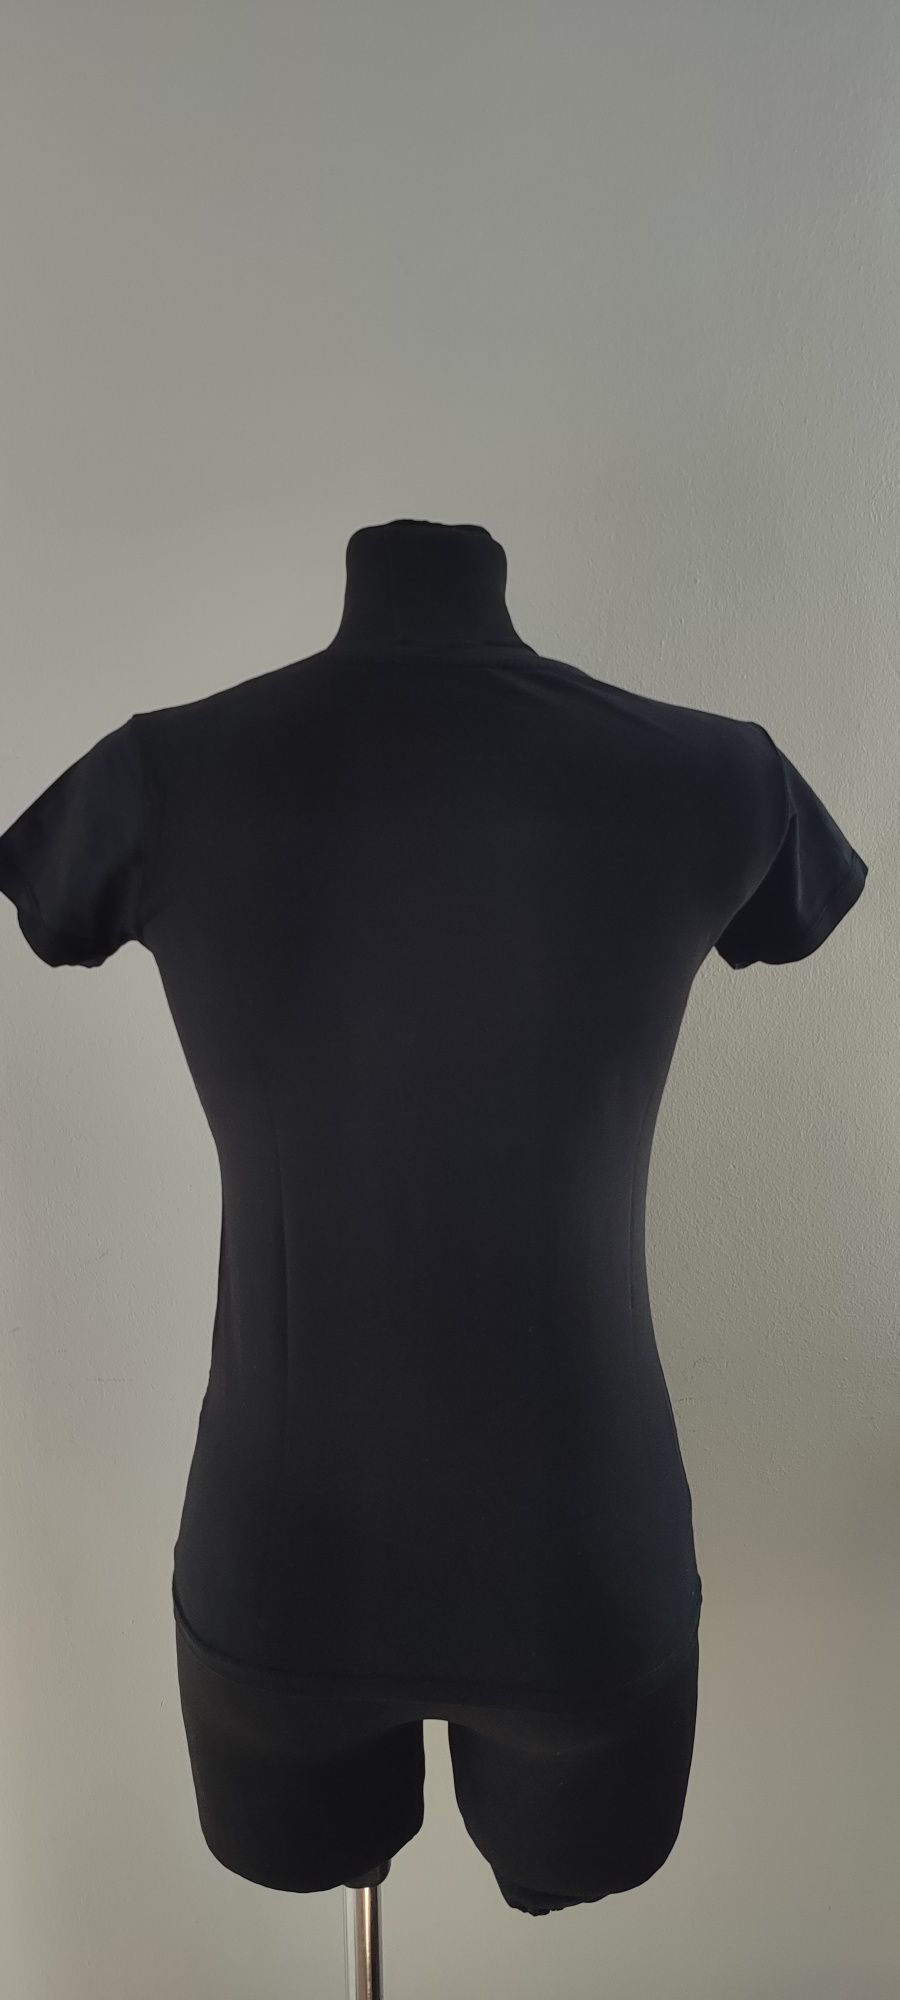 Dior koszulka damska czarna cekiny S 36